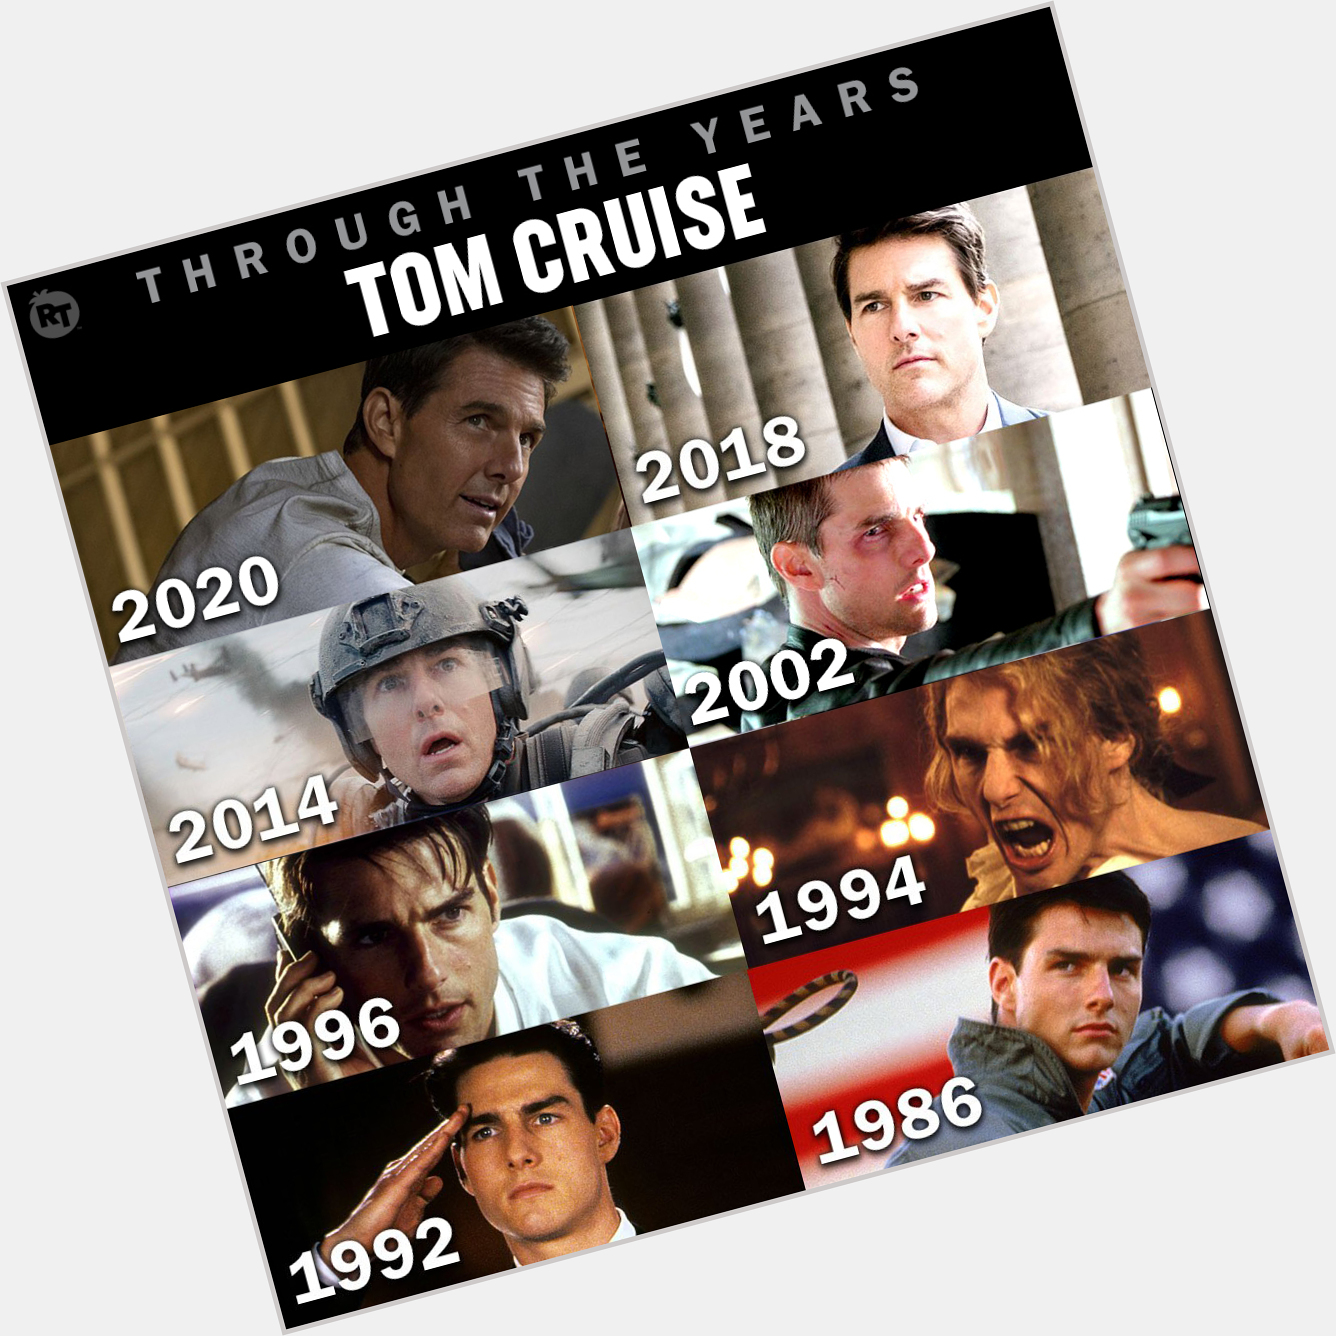 Tom Cruise - Through the Years

Happy birthday to the Maverick! 